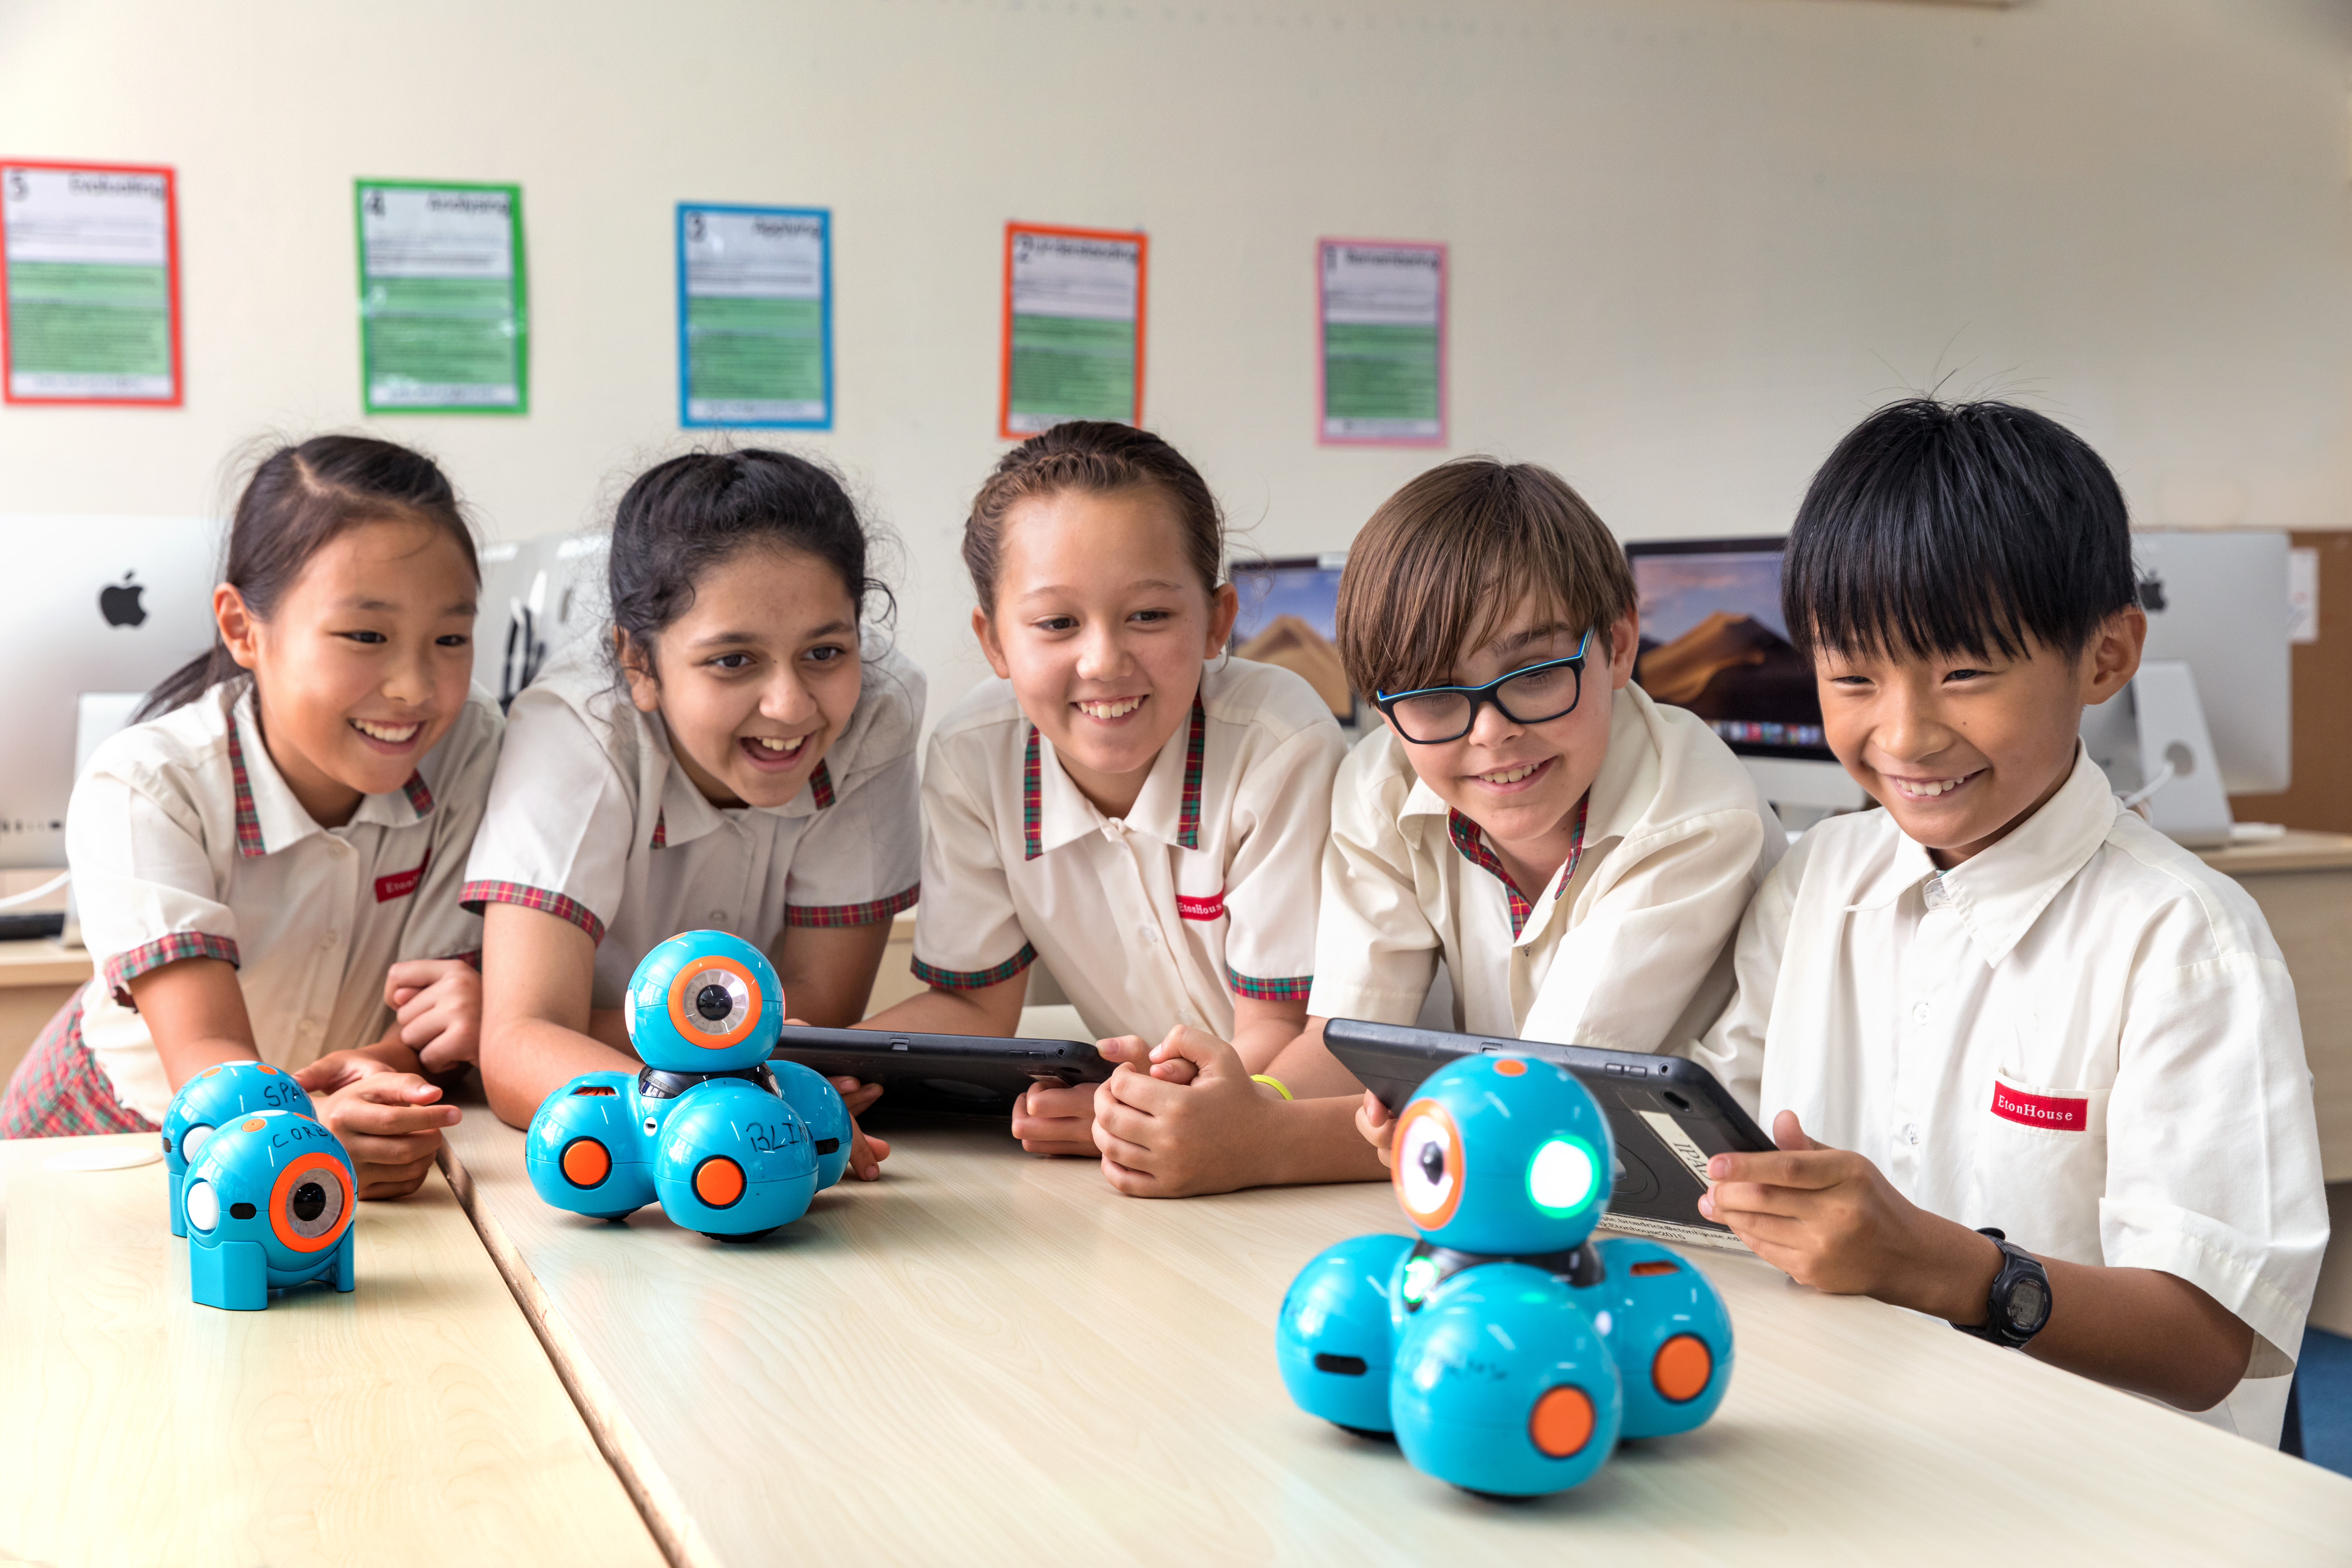 EtonHouse children learning robotics